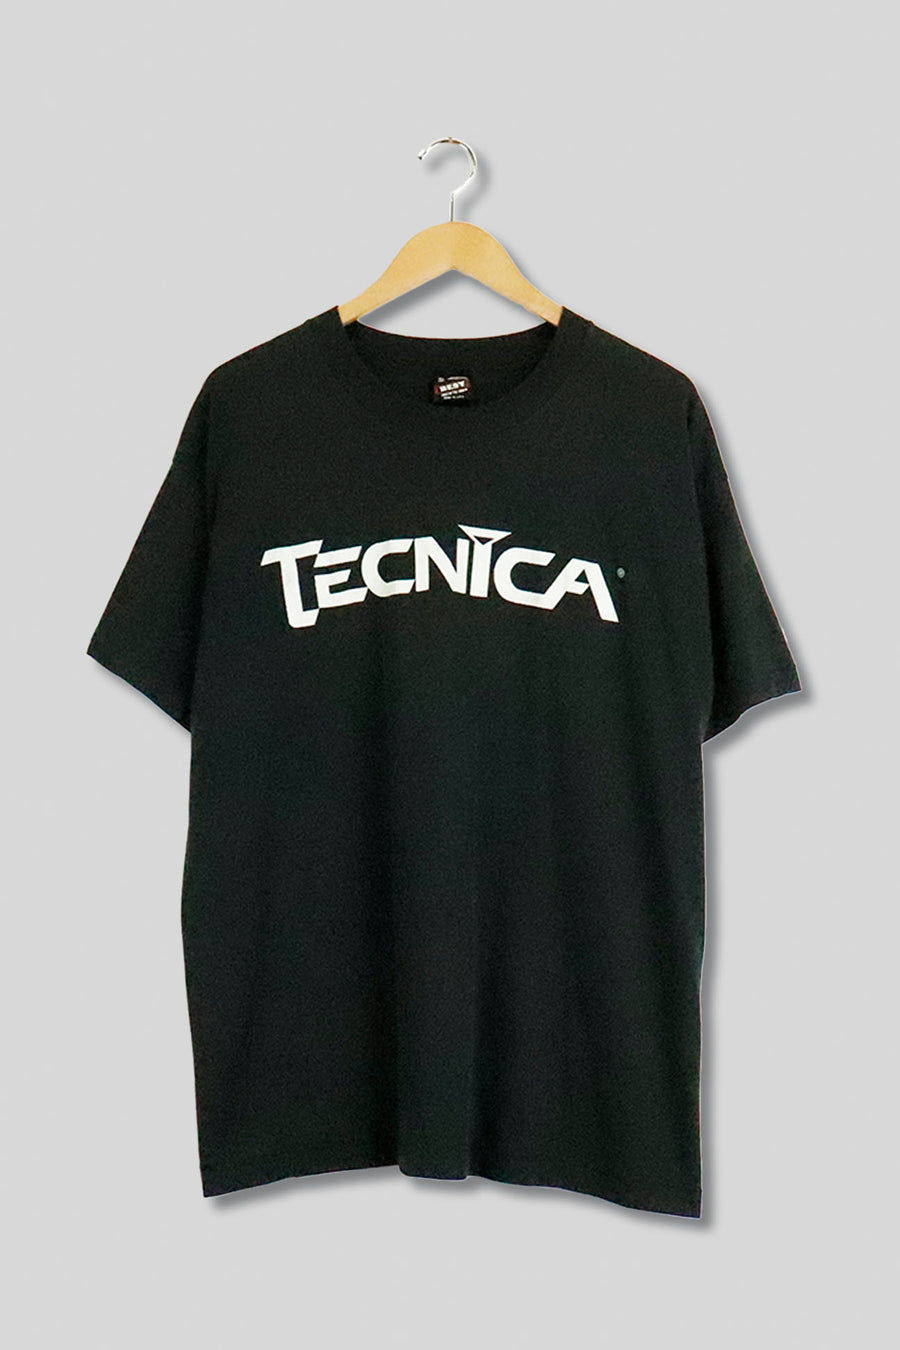 Vintage Tecnica T Shirt Sz XL